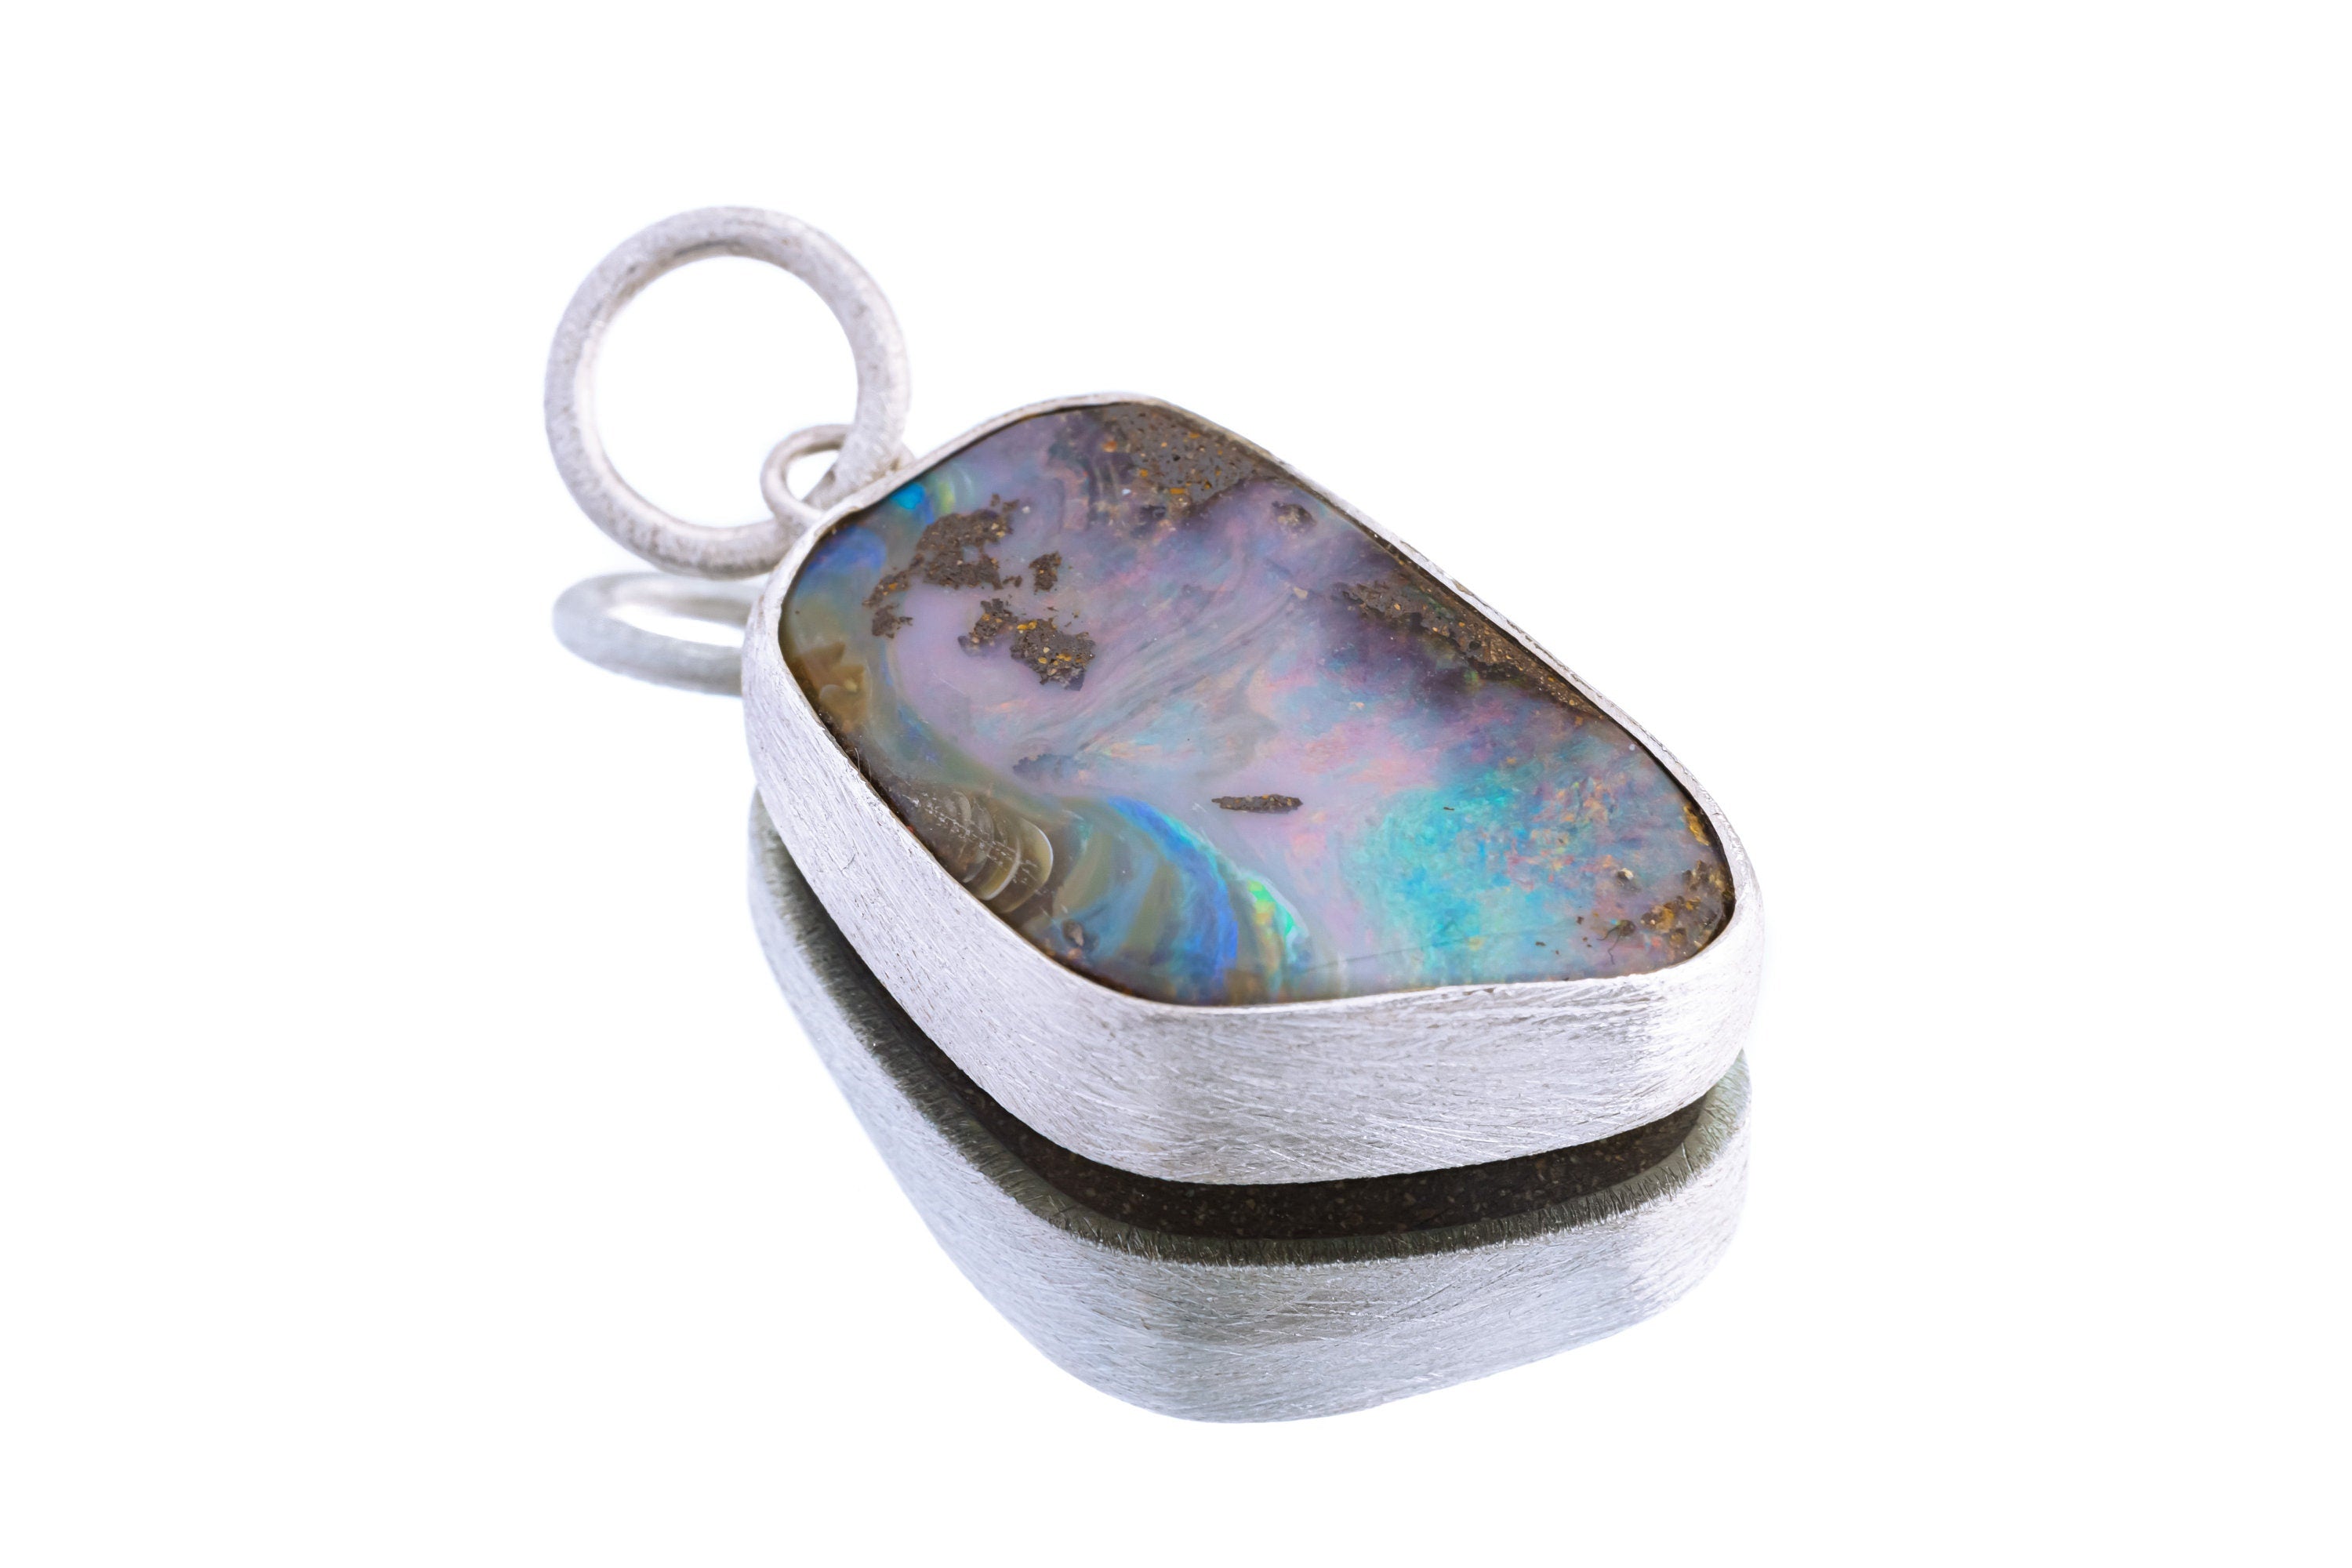 Australian Pink & blue Nebular Precious Freeform Boulder Opal - Natural Solid Opal - Textured 925 Silver Setting - Crystal Pendant Neckpiece